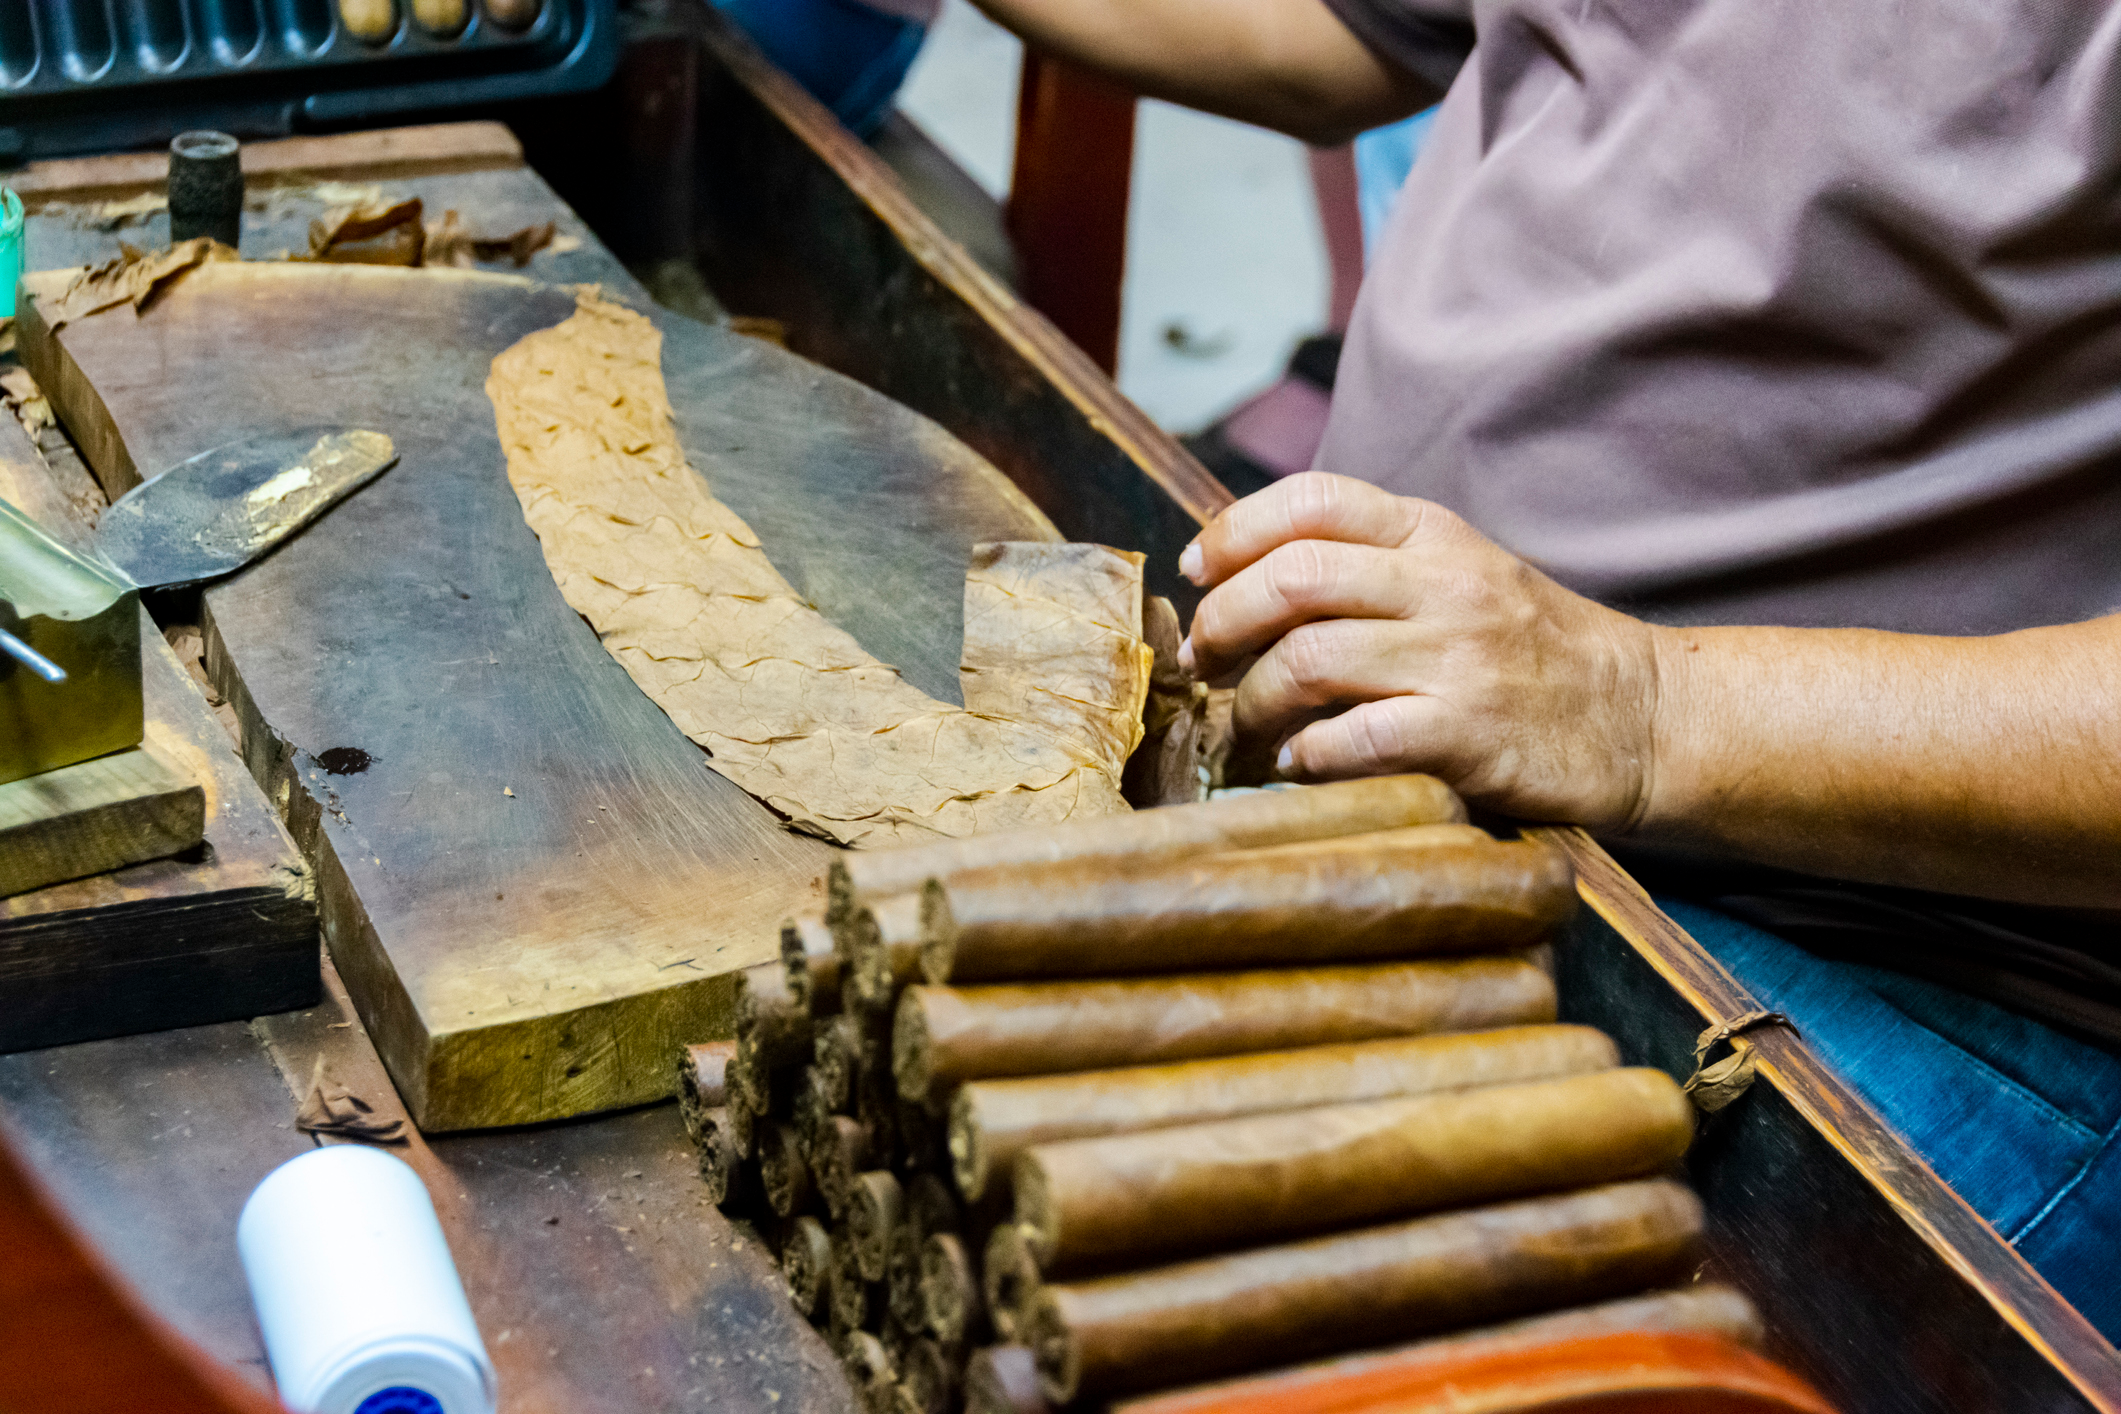 A Cuban cigar maker rolling a cigar in a traditional way